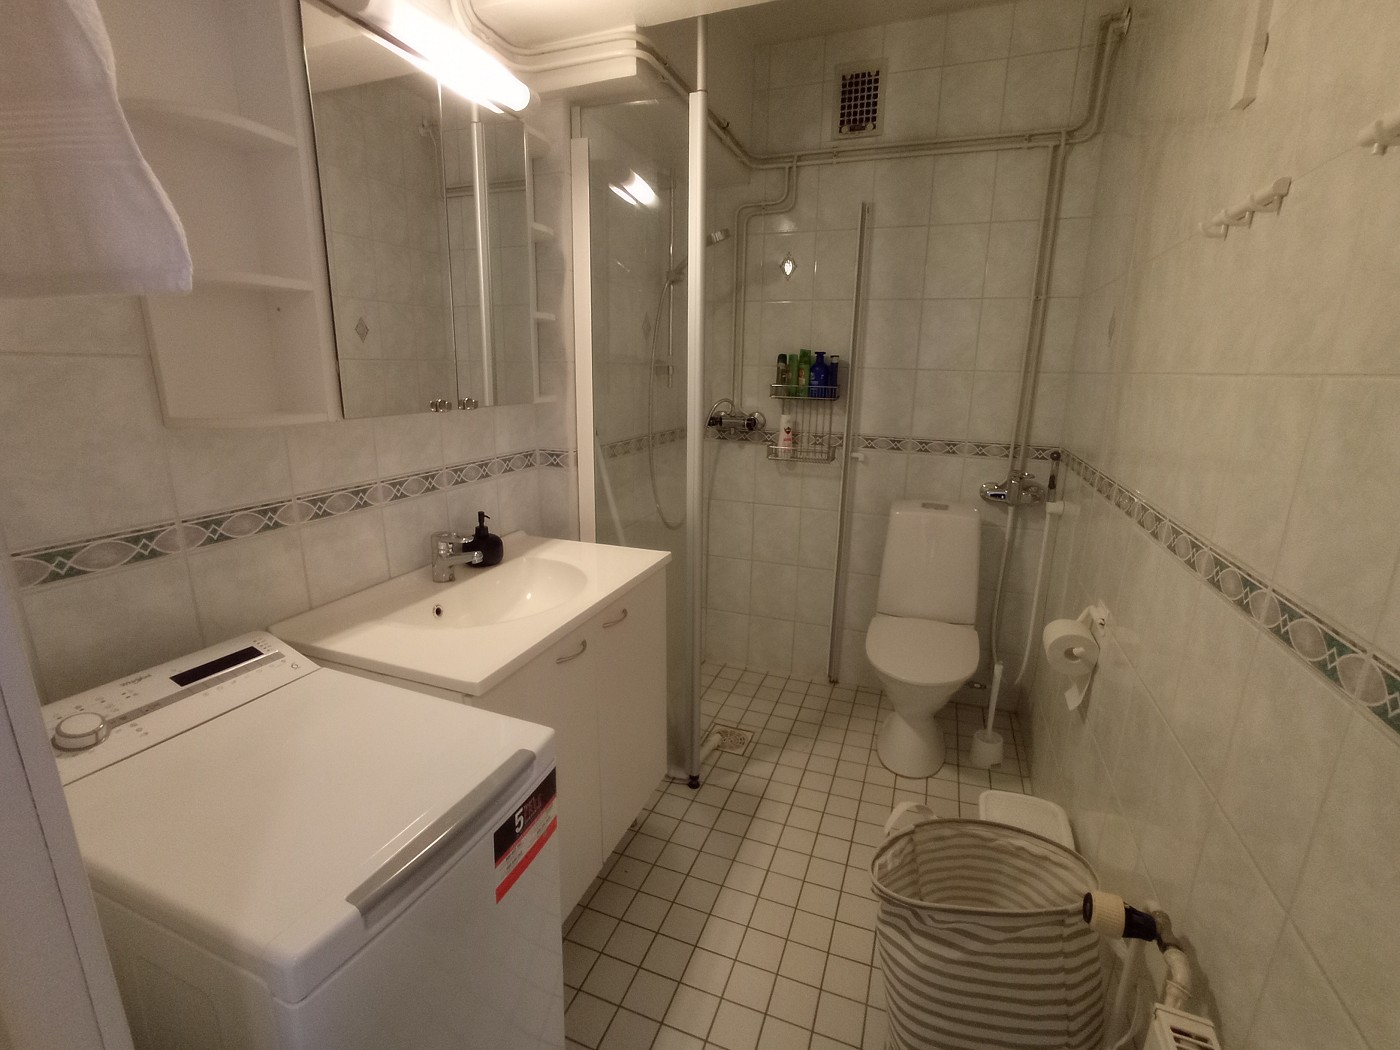 Airbnb Oulu shower bathroom top loader washing machine